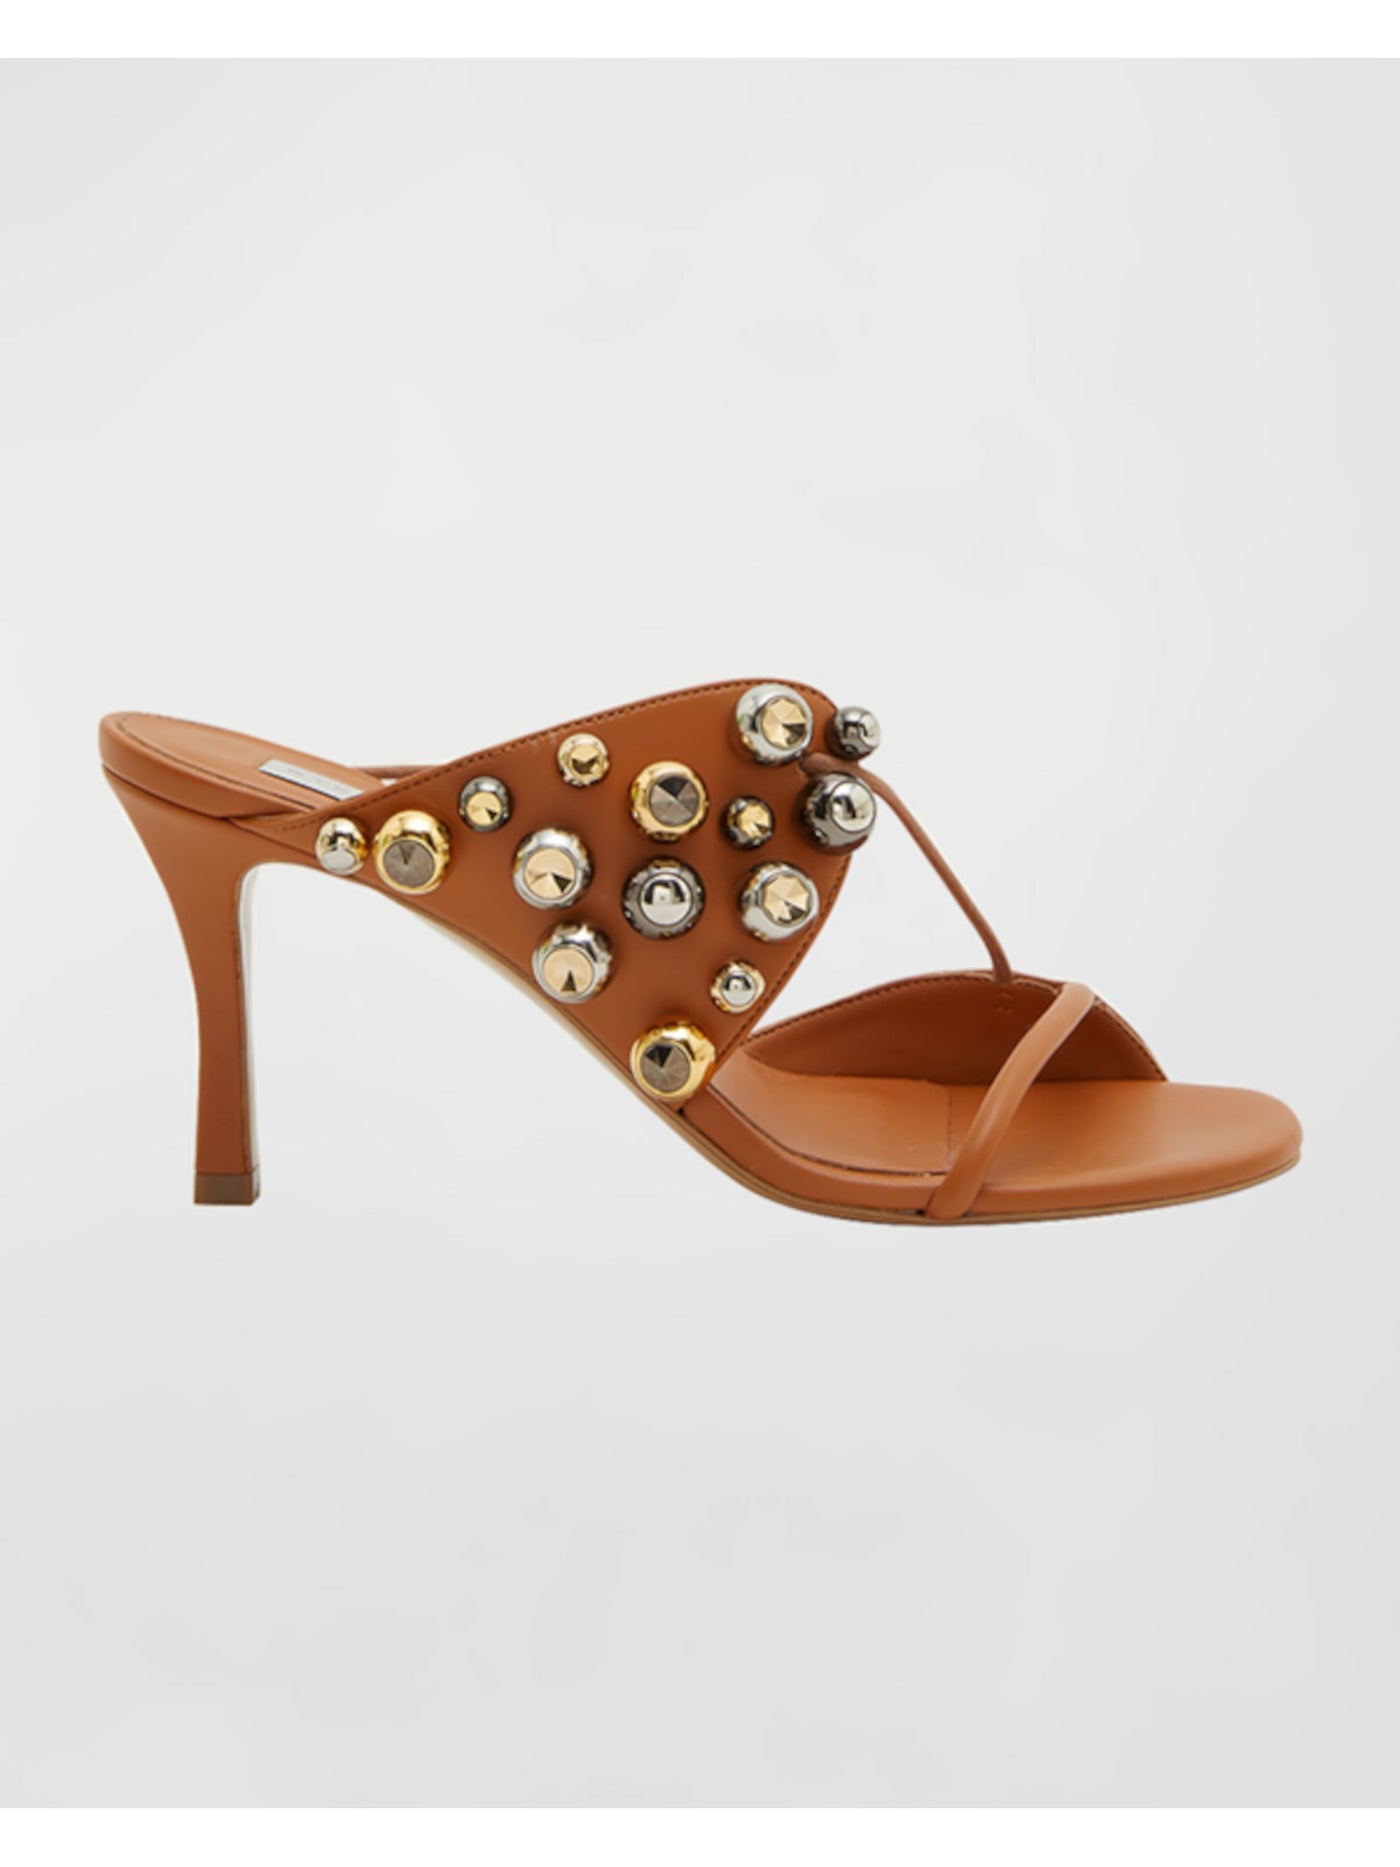 STELLAMCCARTNEY Womens Brown Embellished Asymmetrical Open Toe Stiletto Slip On Dress Heeled Mules Shoes 38.5